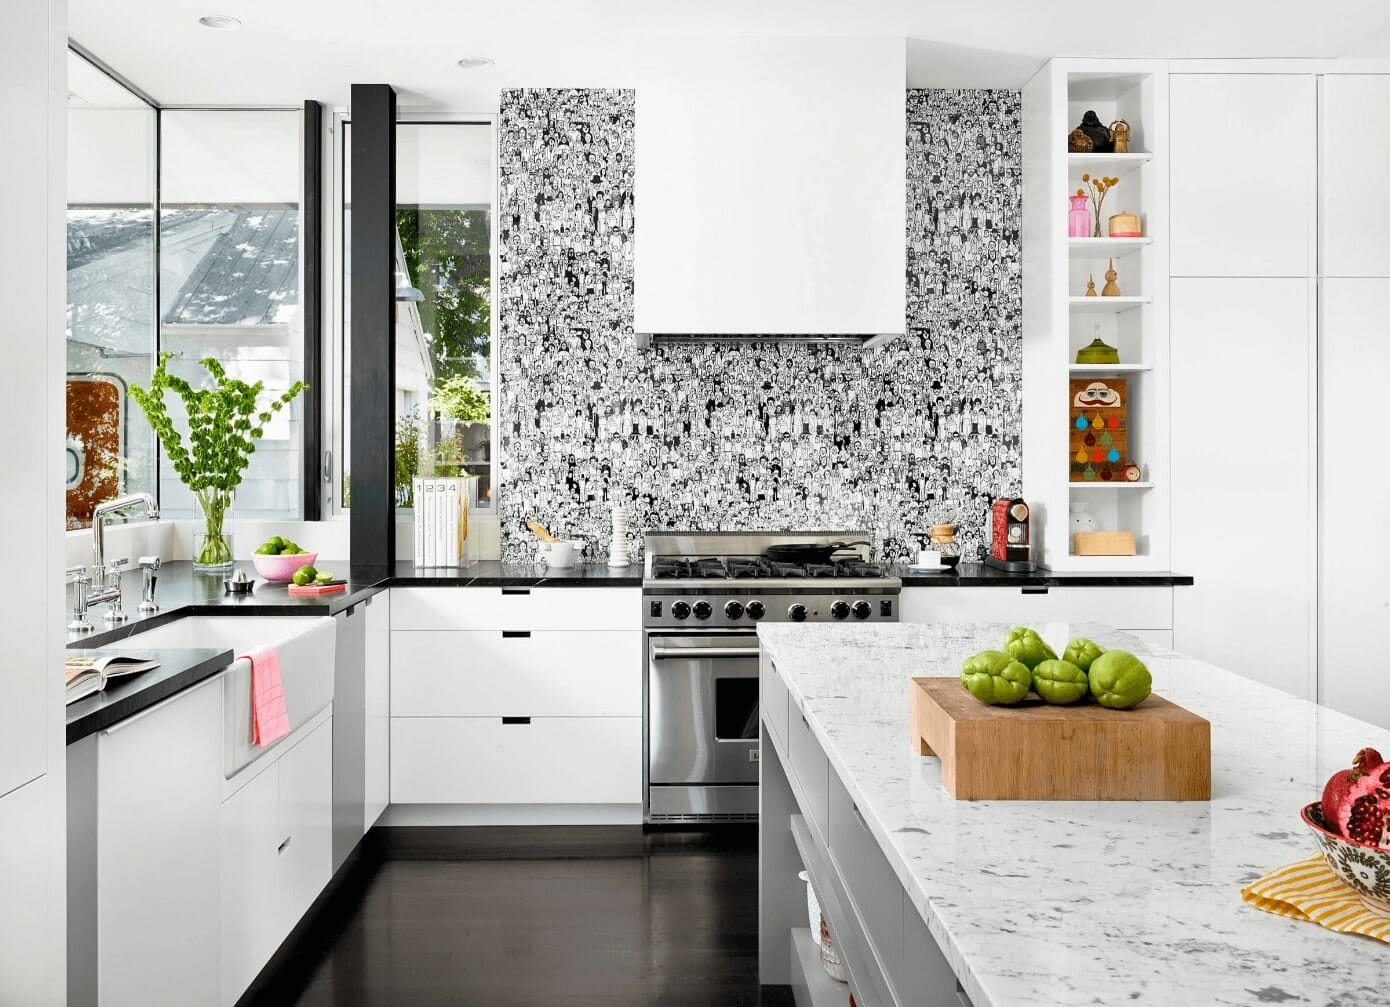 Backsplash wallpaper ideas for the kitchen